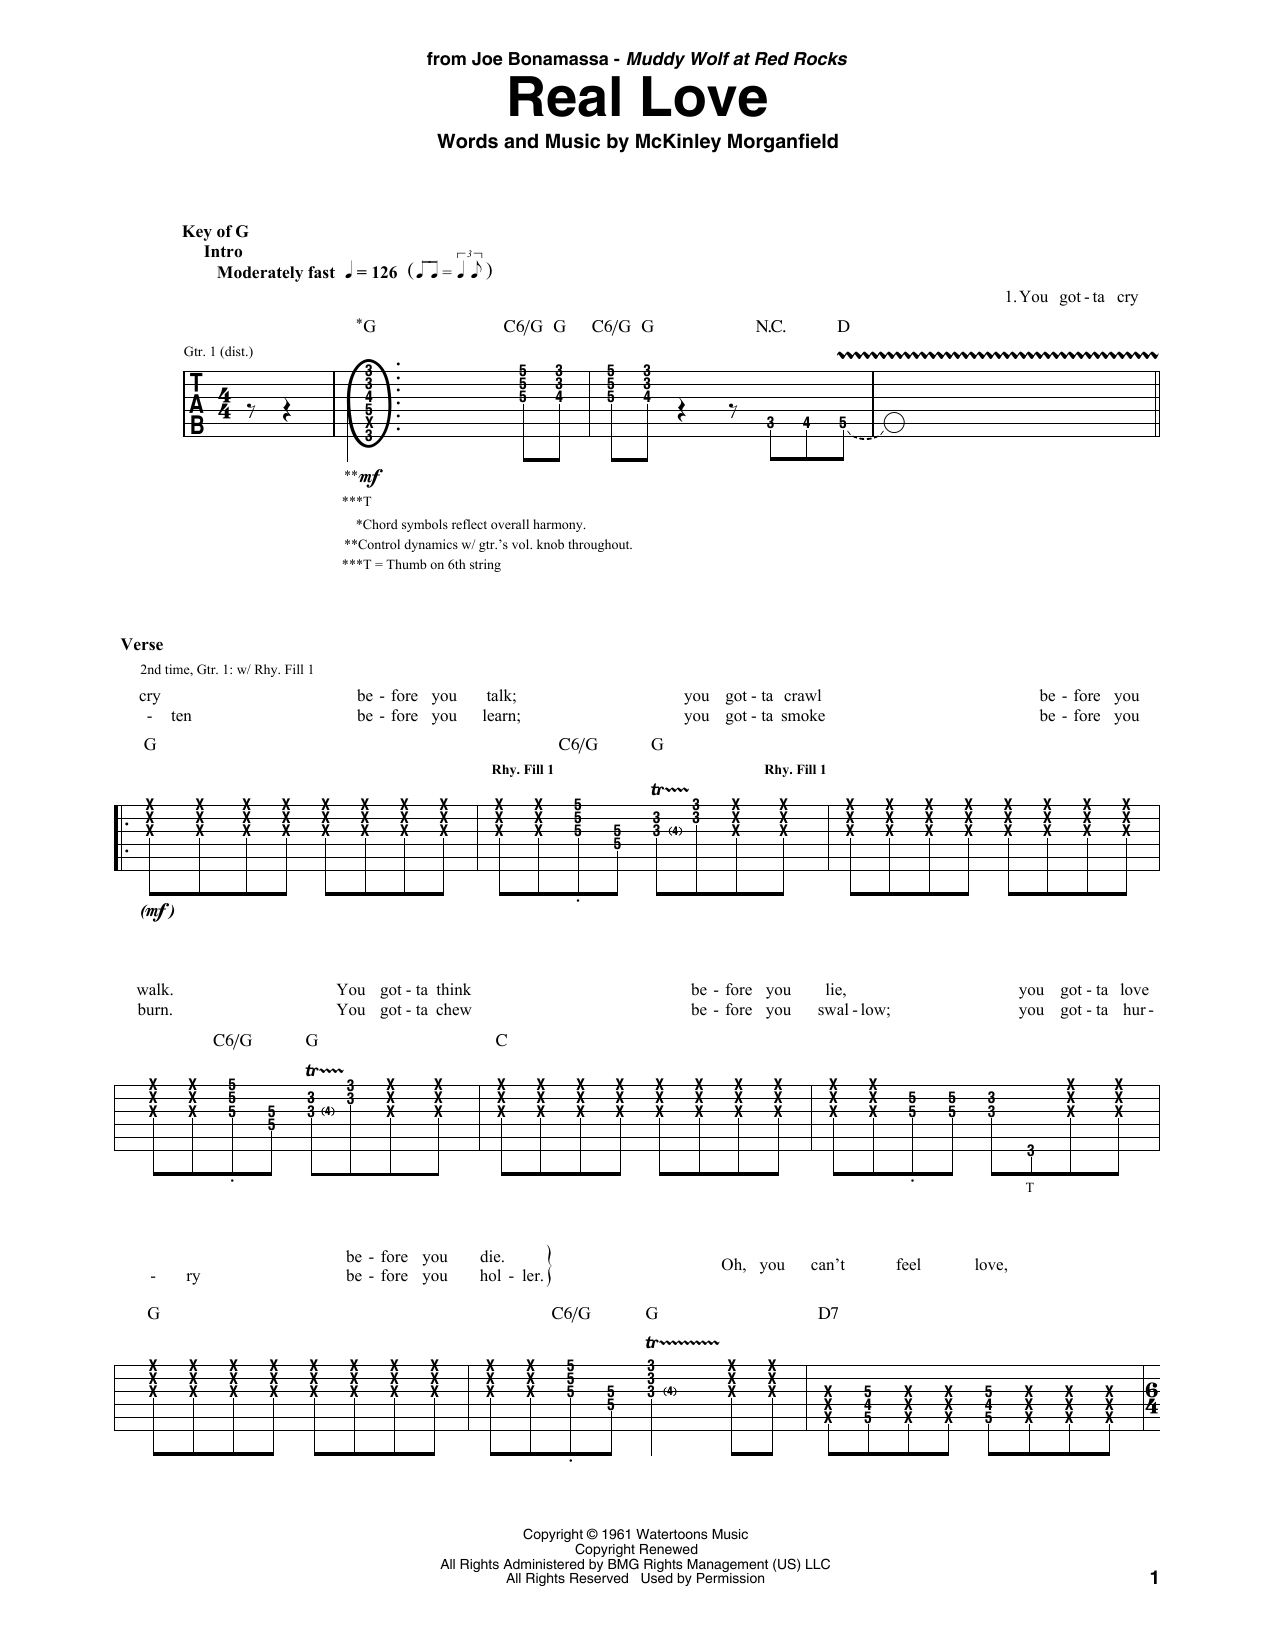 Download Joe Bonamassa Real Love Sheet Music and learn how to play Guitar Tab PDF digital score in minutes